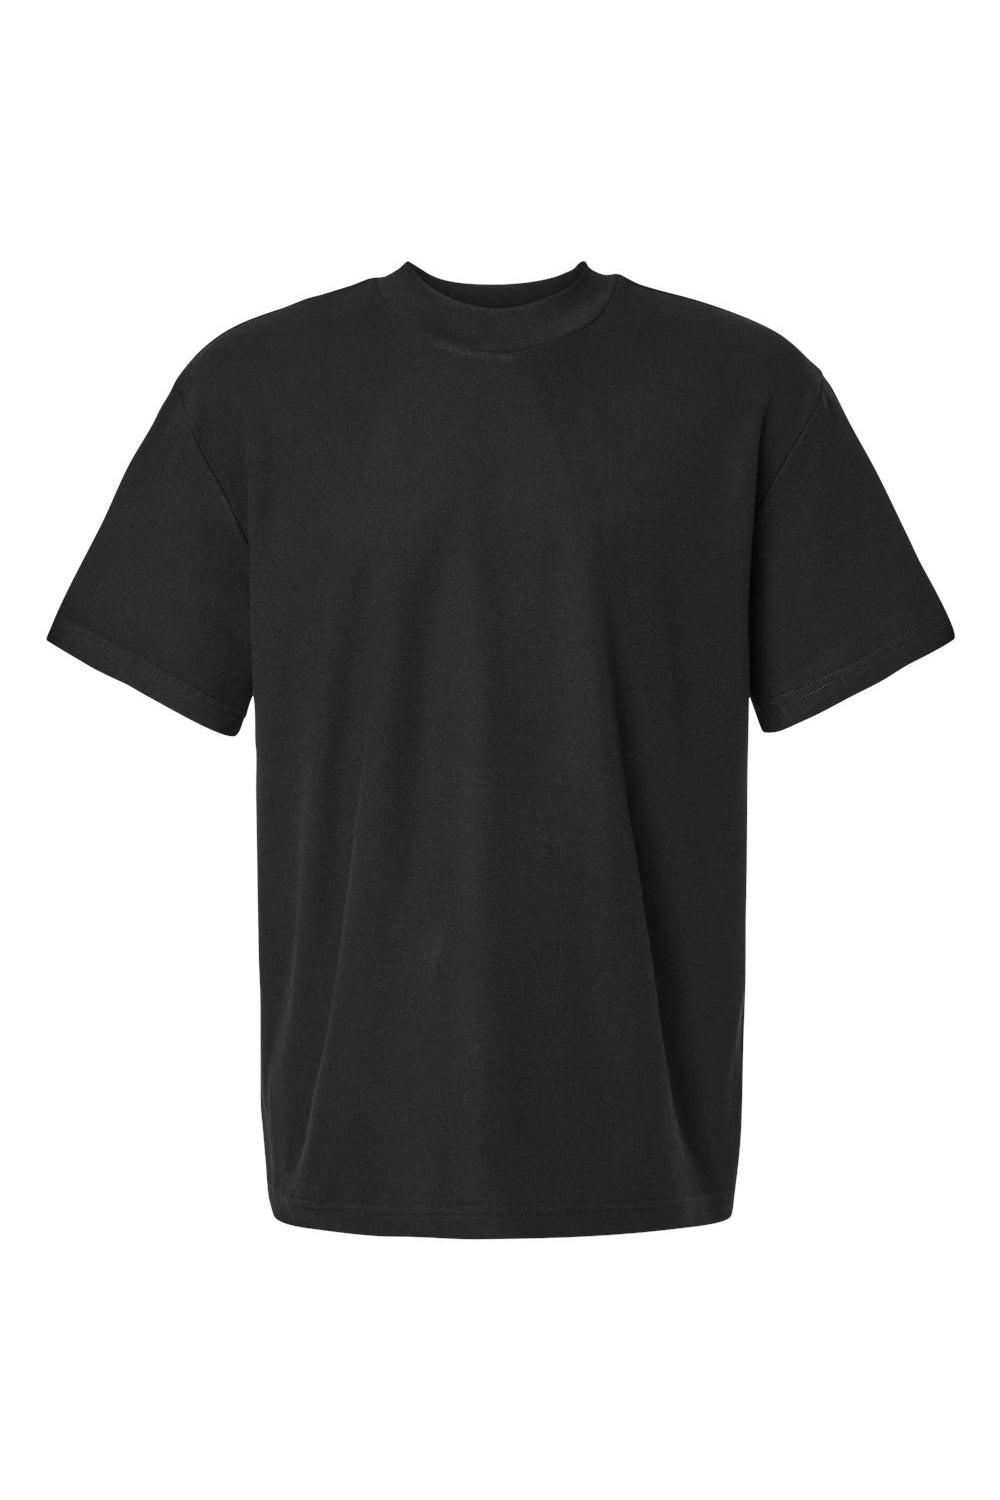 American Apparel 1PQ Mens Short Sleeve Mock Neck T-Shirt Black Flat Front